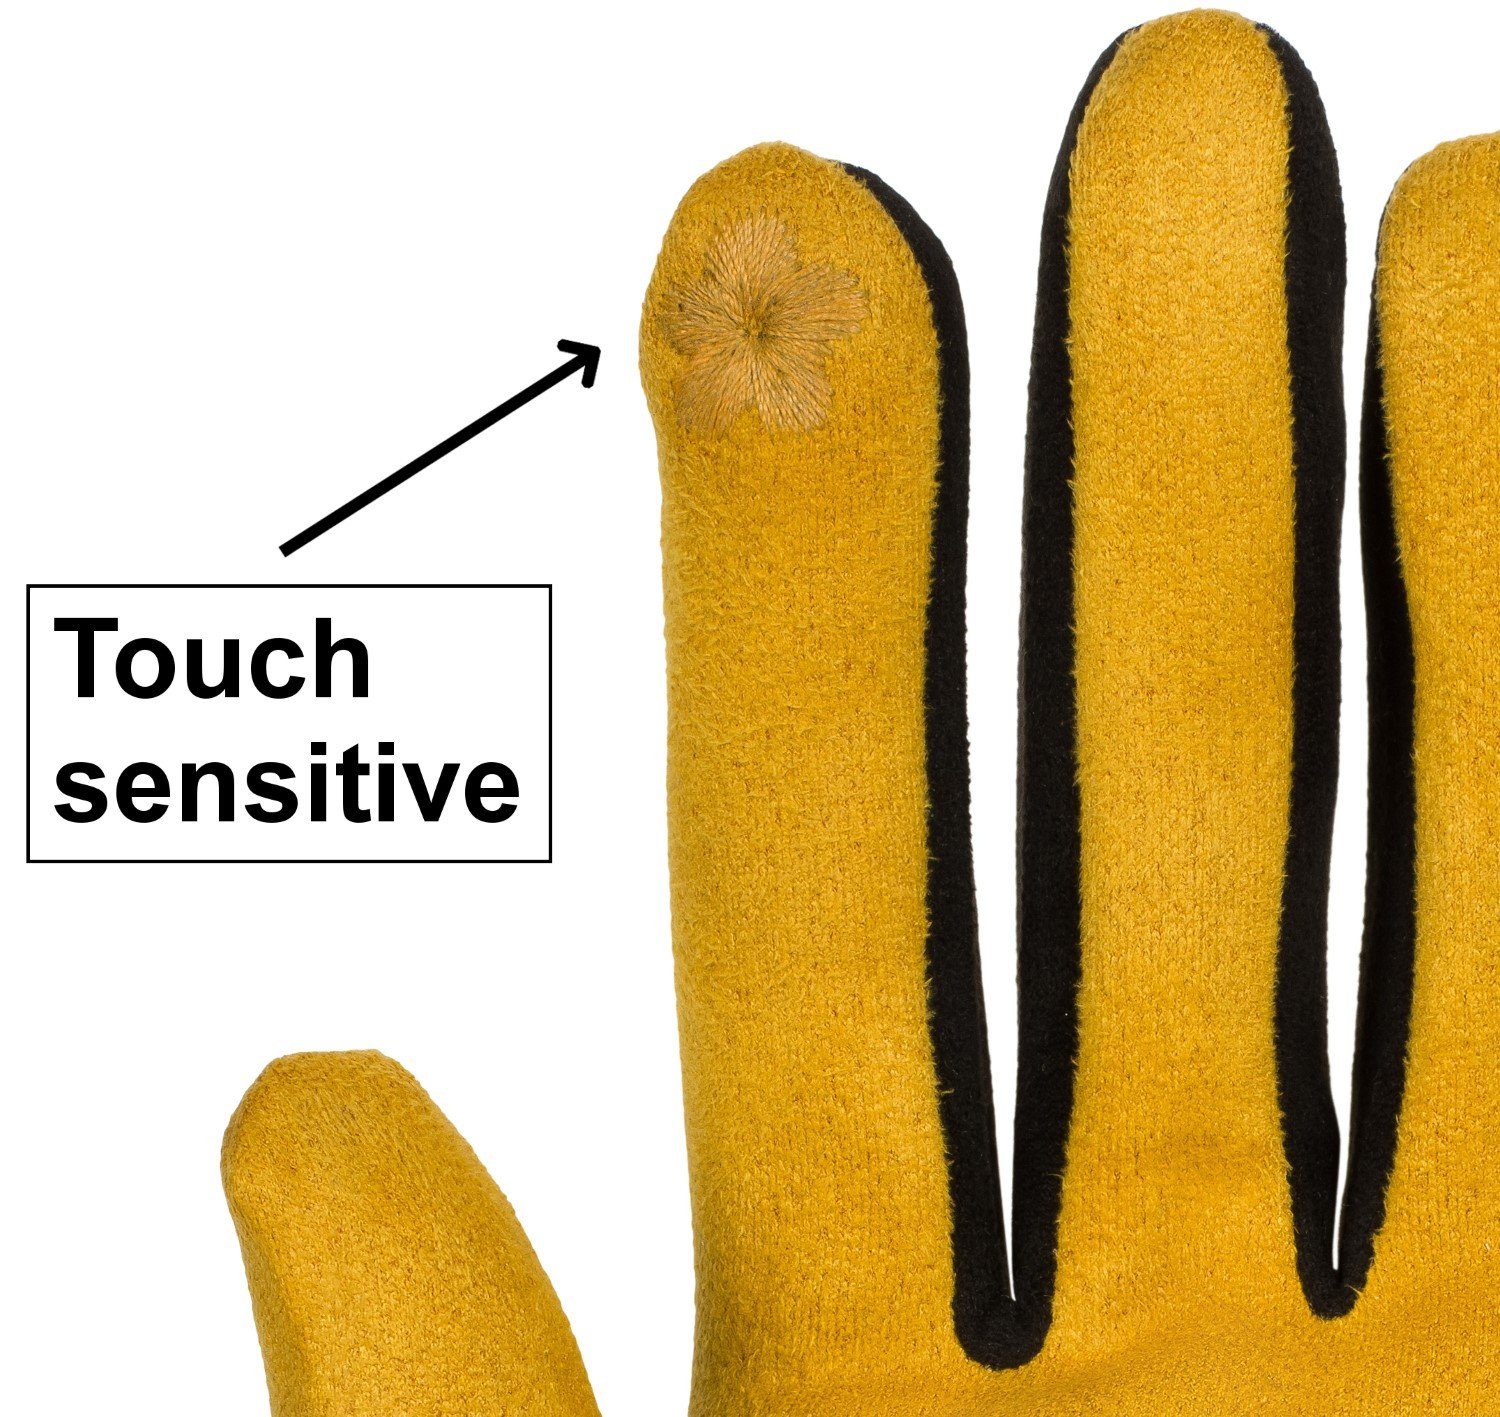 styleBREAKER Fleecehandschuhe Touchscreen Handschuhe Kontrast Curry